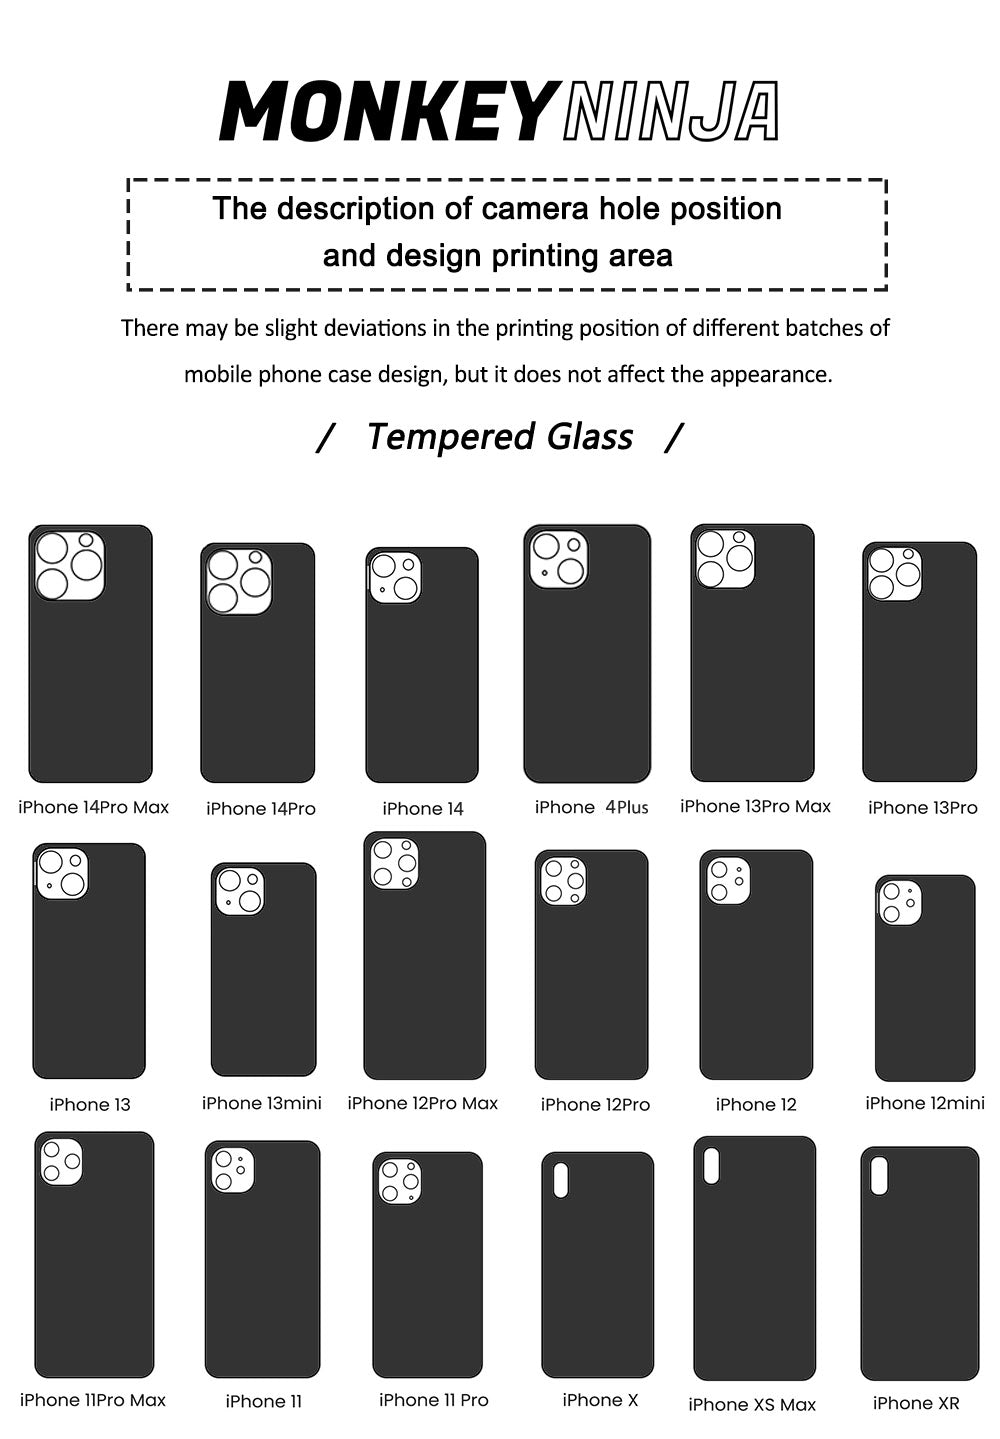 My Hero Academia Vigilante Deku Tempered Glass Soft Silicone iPhone Case